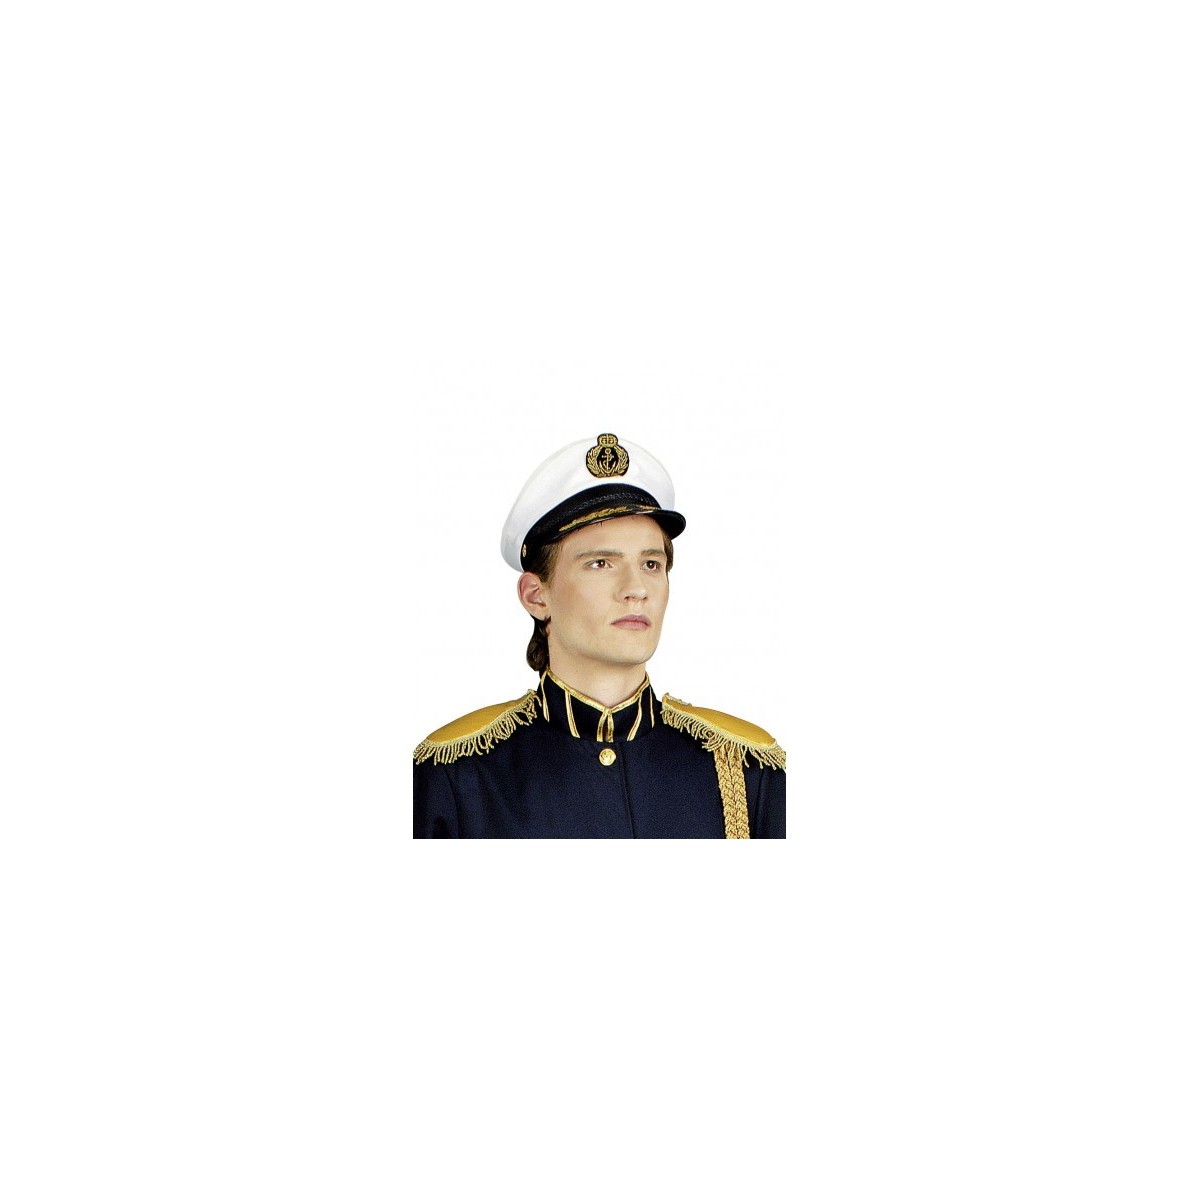 Casquette Capitaine de la marine